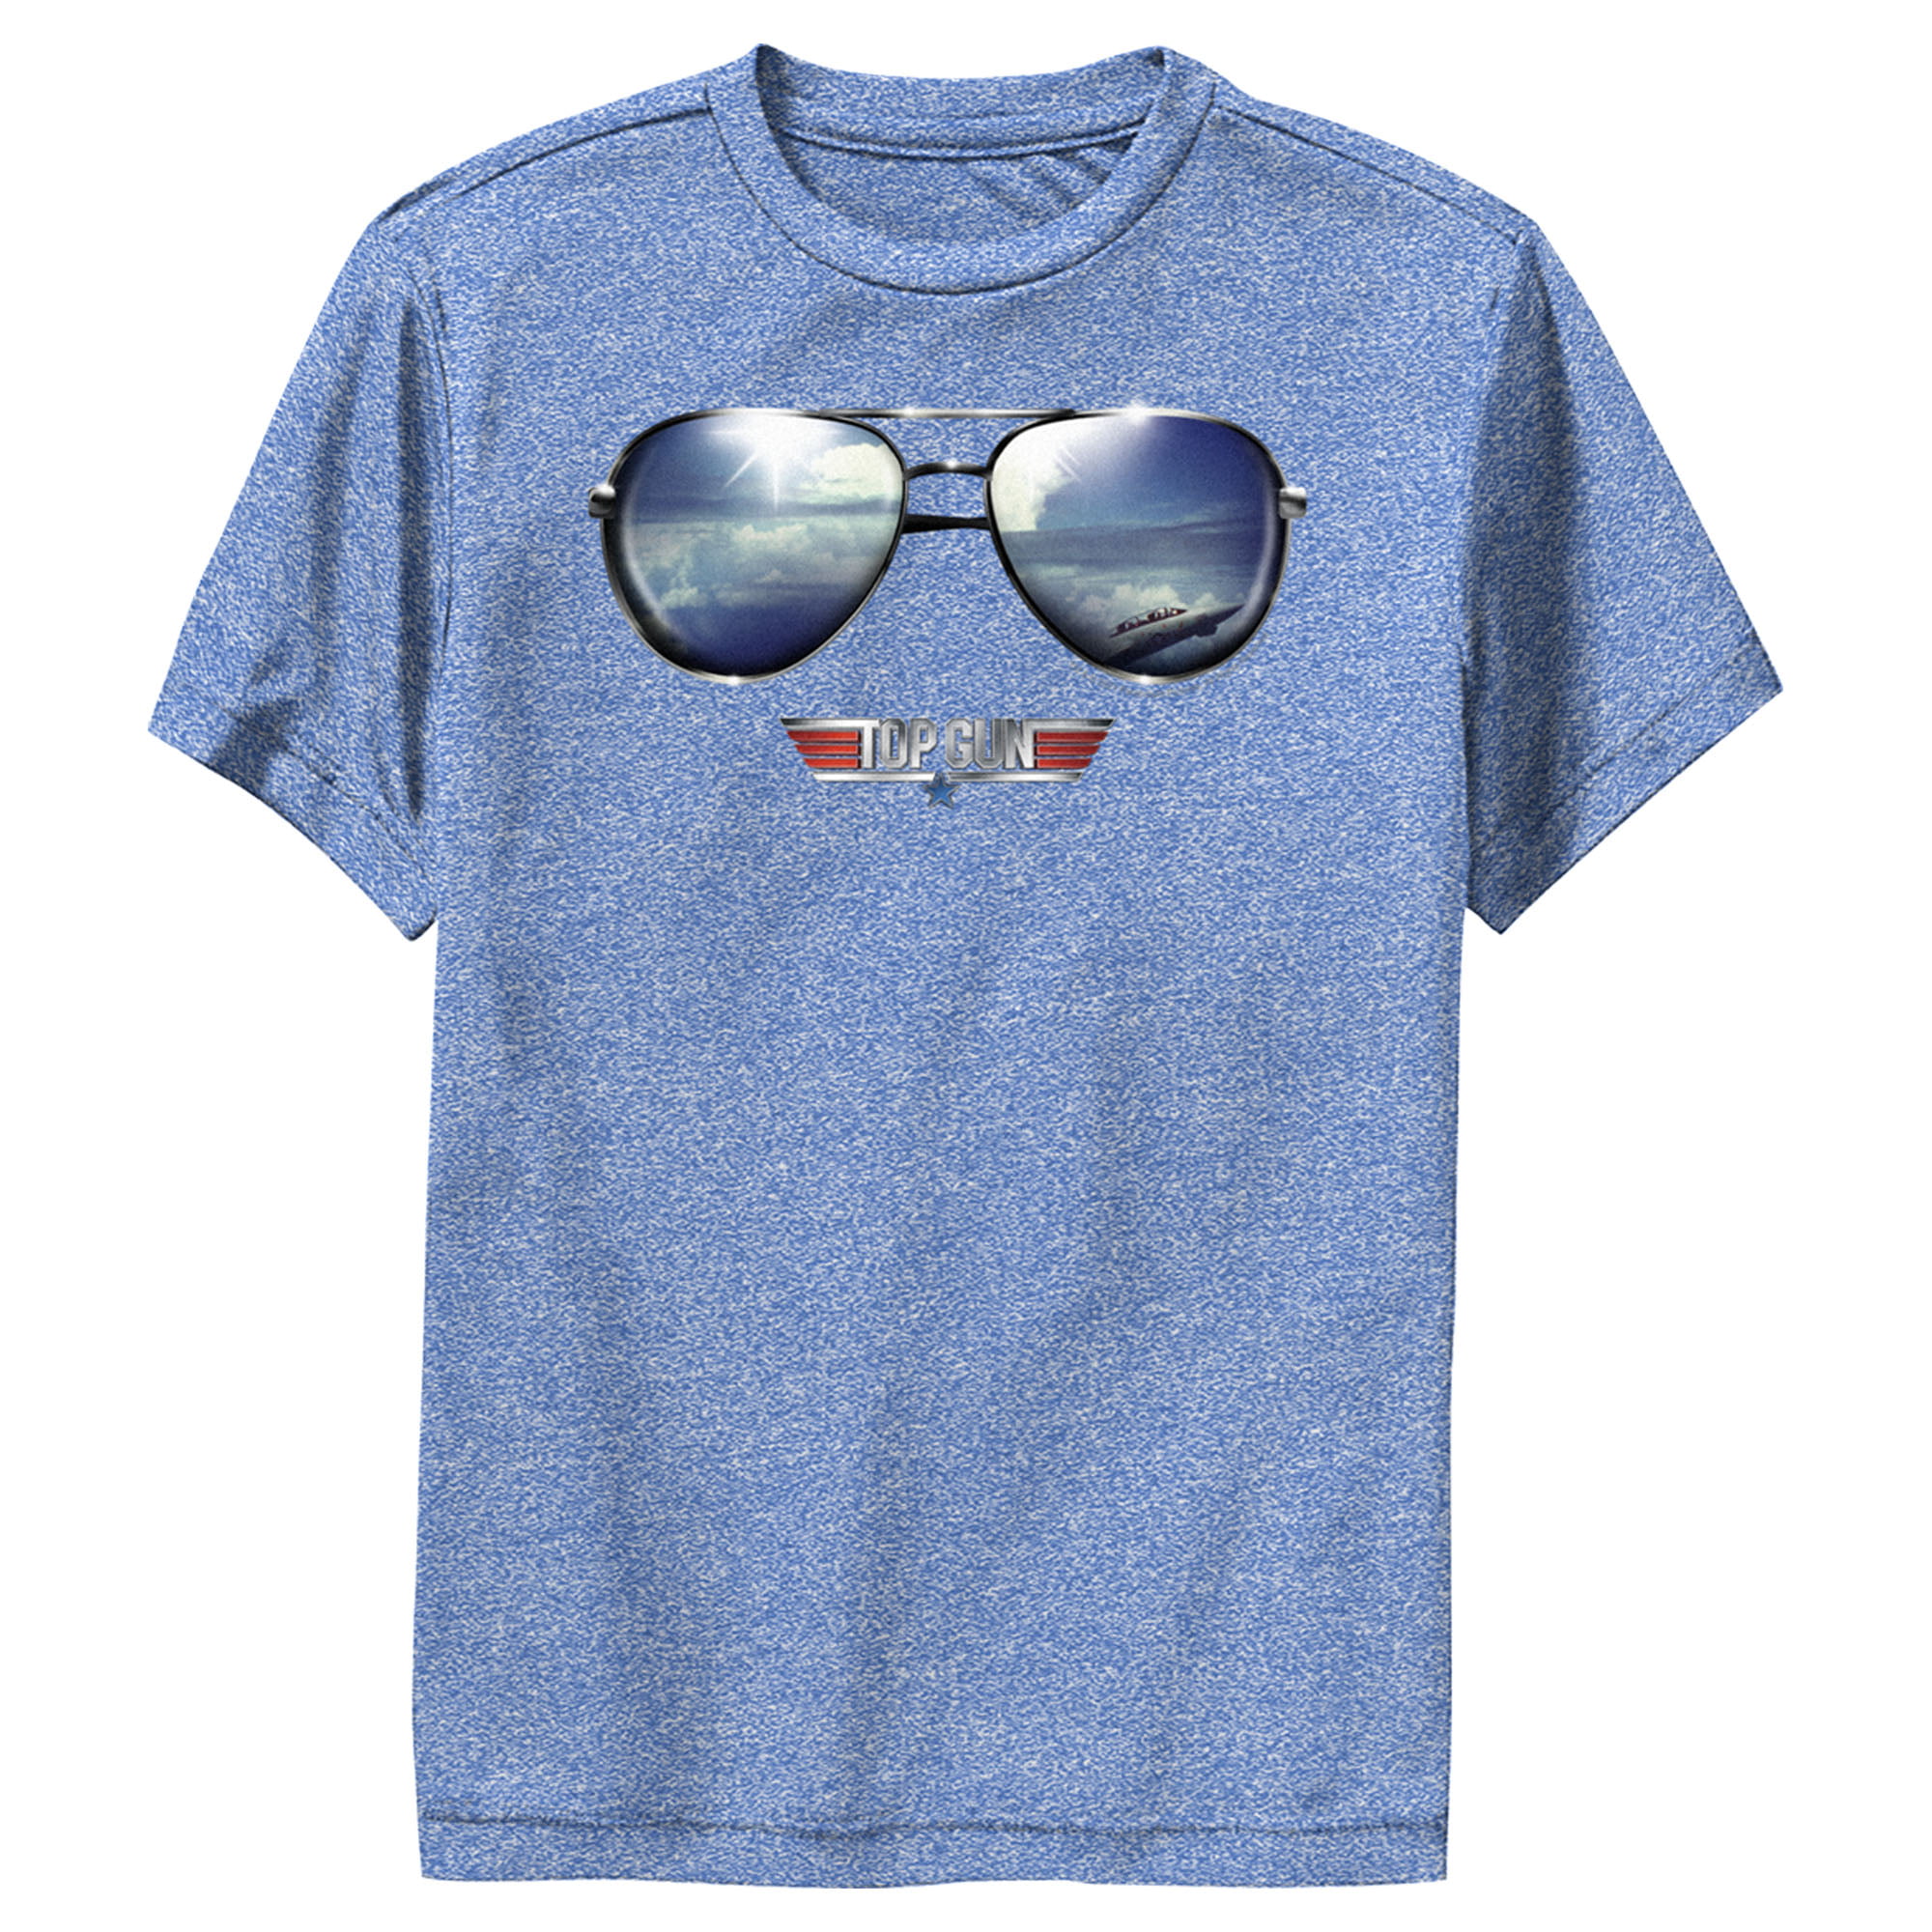 Boy\'s Top Gun Tee Heather Aviator Reflection Blue Sunglasses Performance Large Graphic Royal Logo